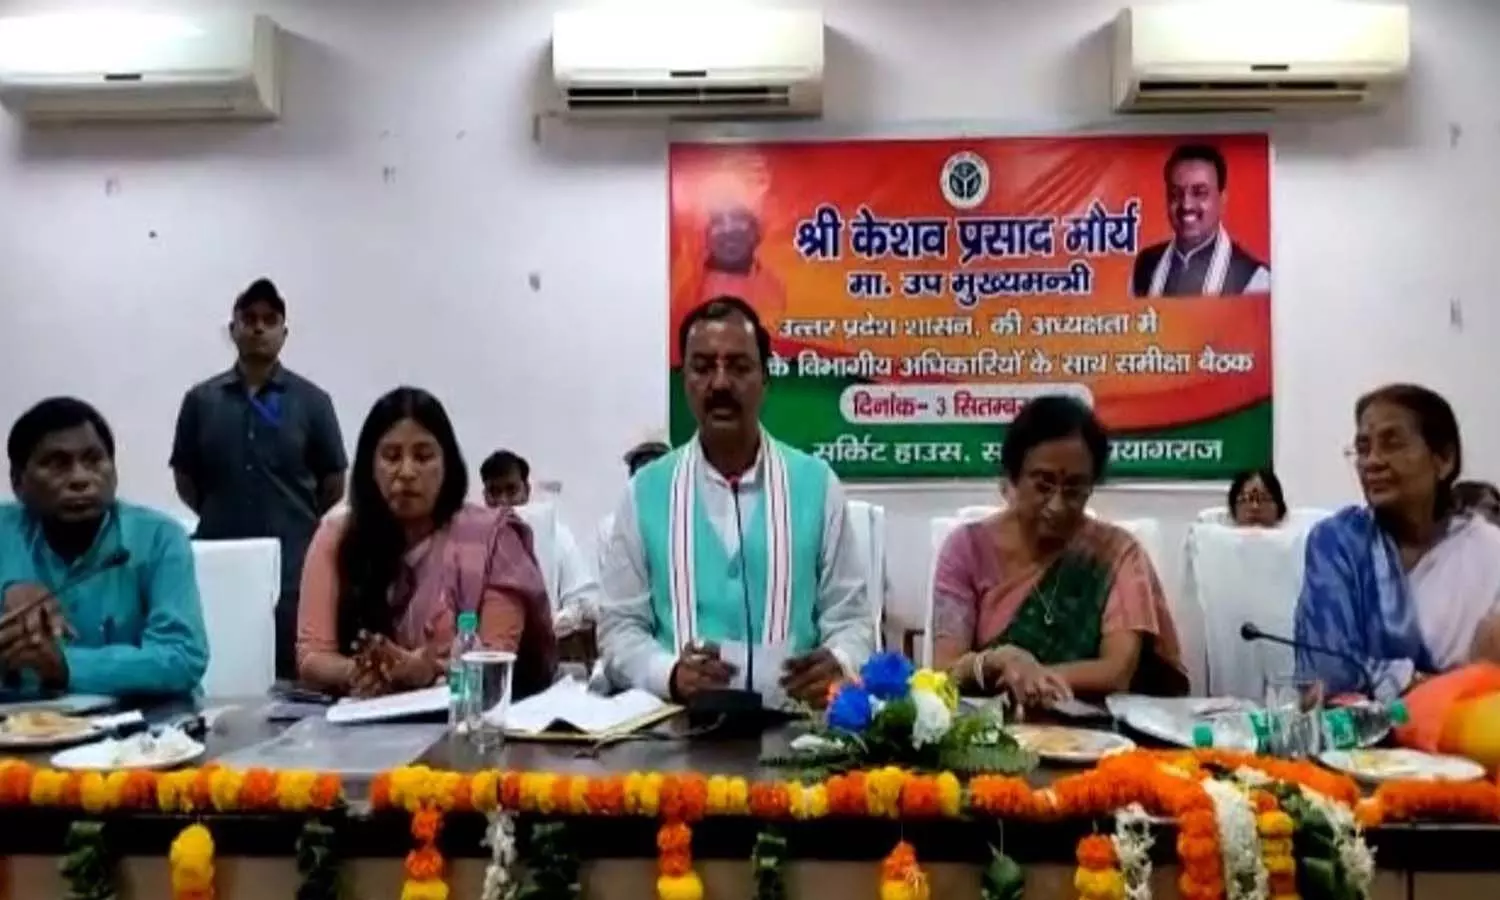 Deputy CM Keshav Prasad Maurya held a meeting in Prayagraj